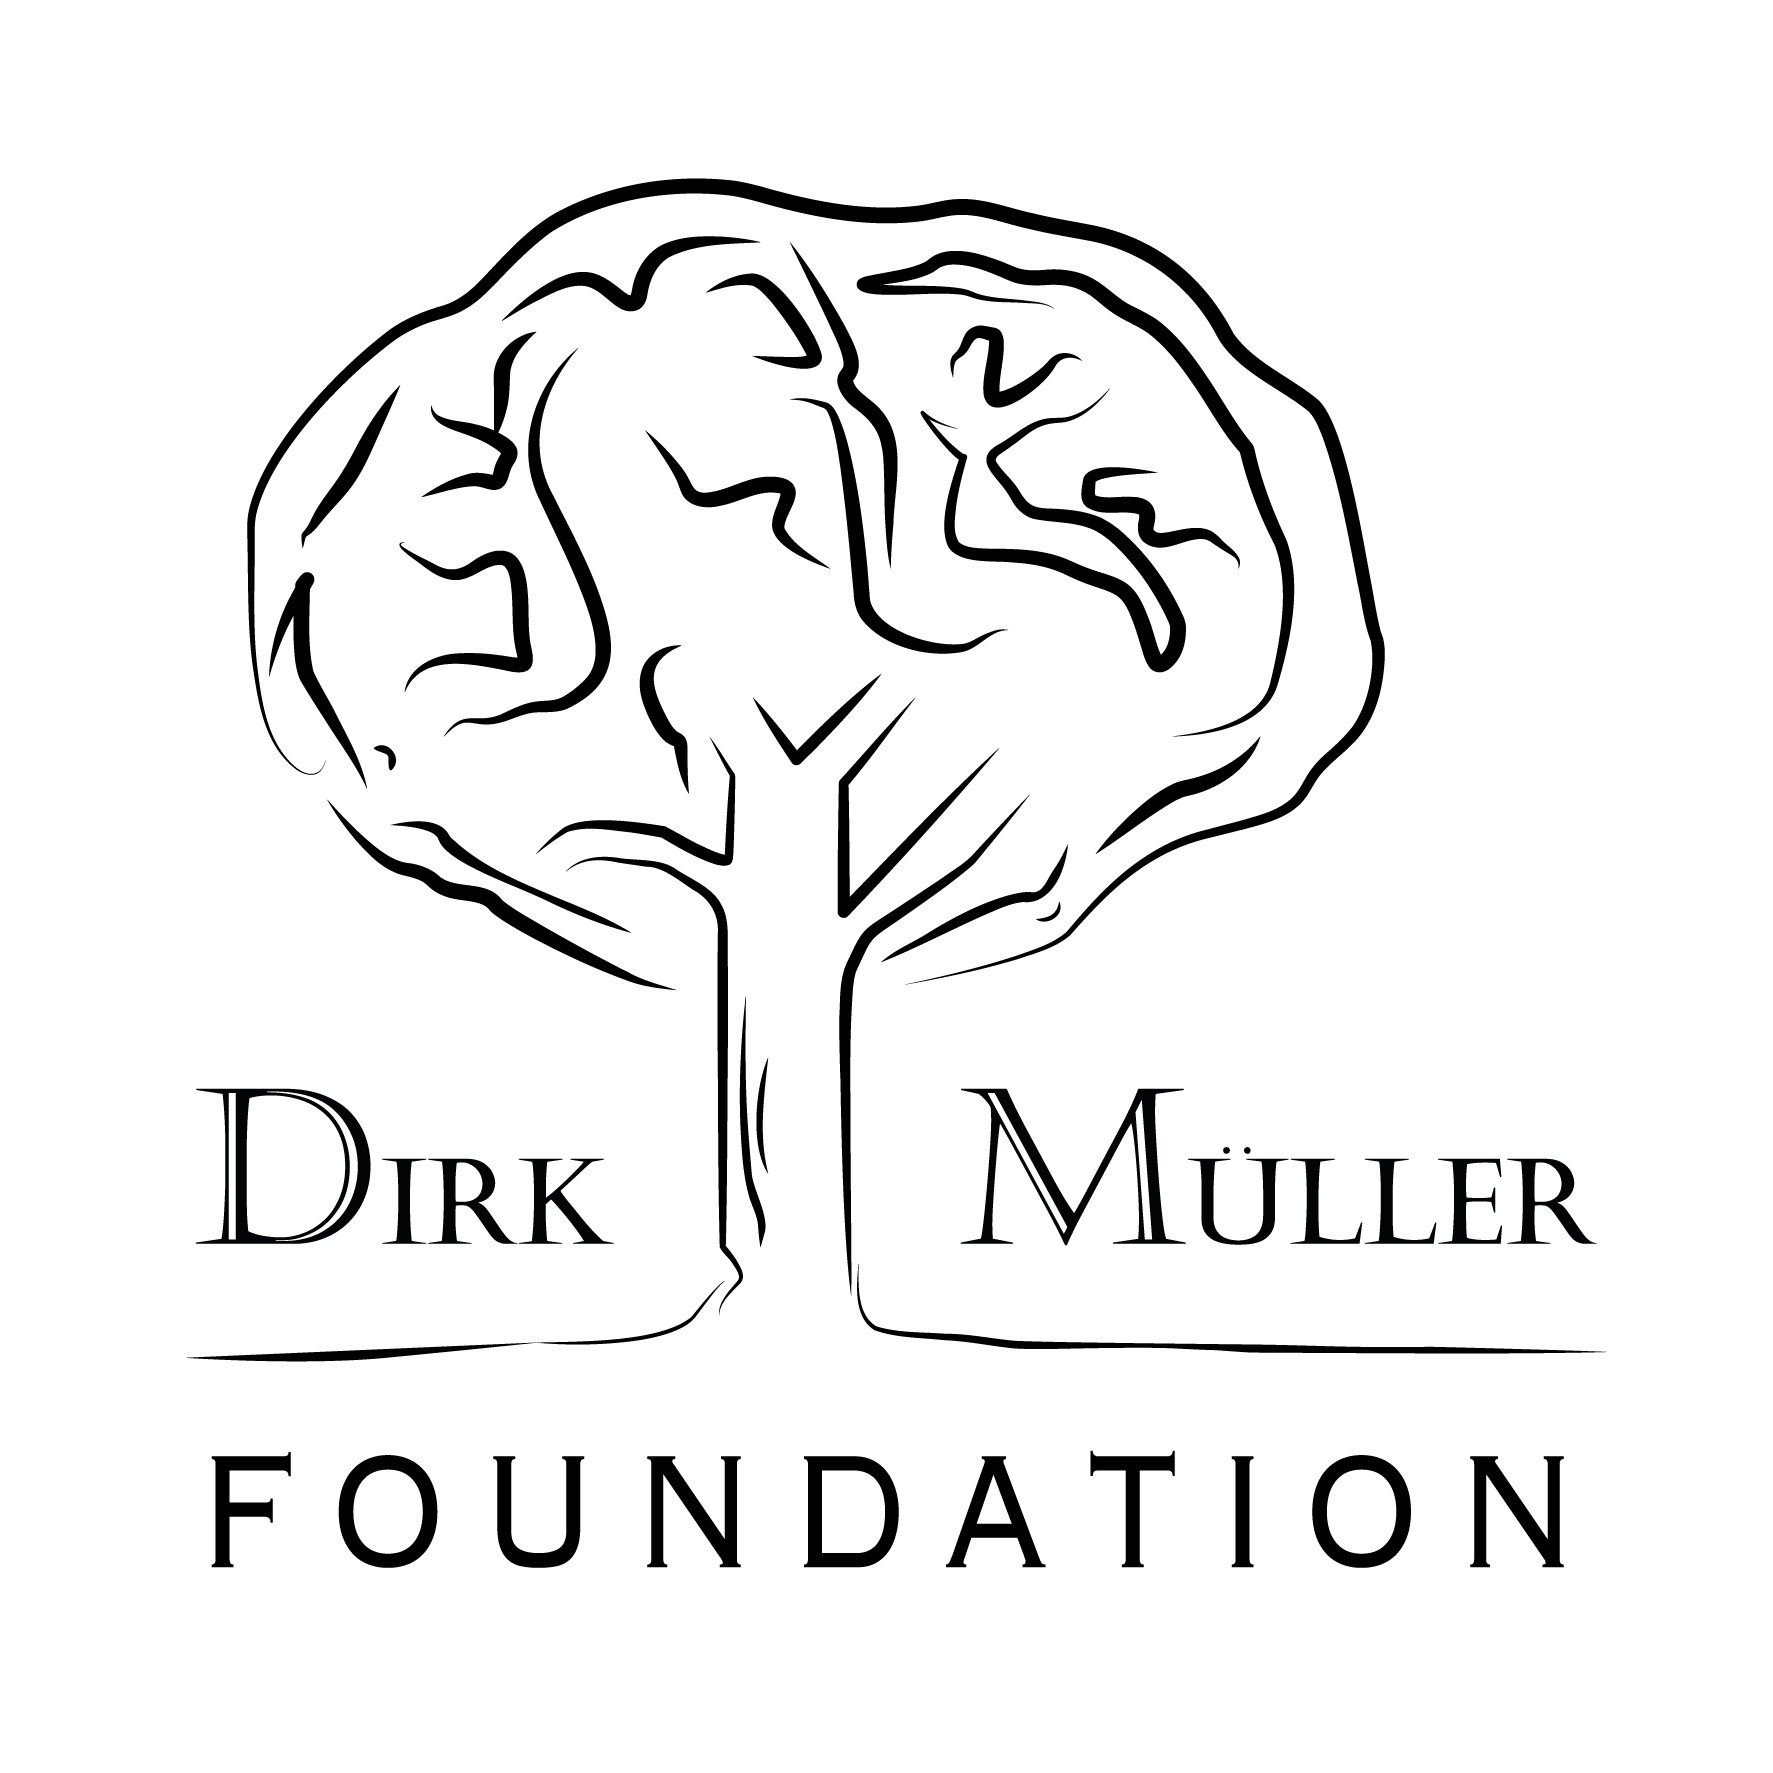 Dirk Müller Foundation